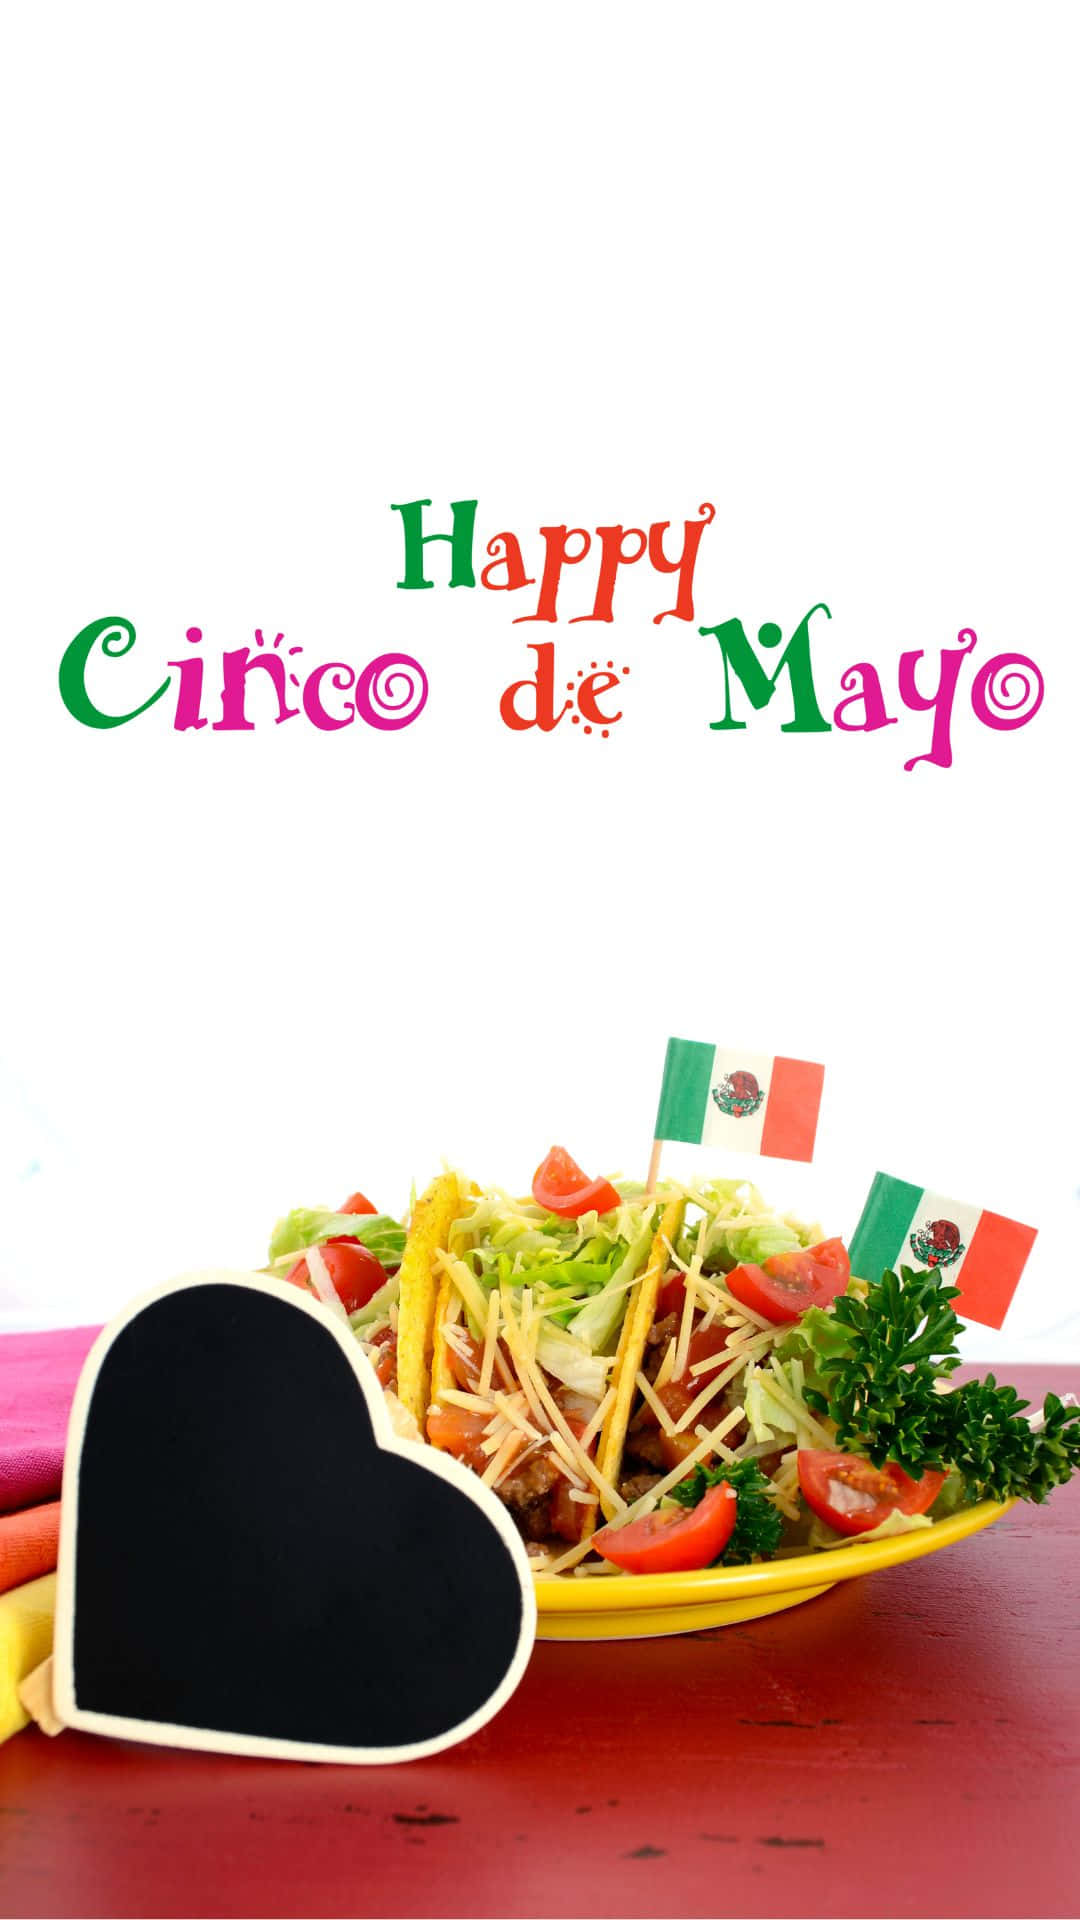 Gladcinco De Mayo - Hd Bakgrundsbilder Wallpaper